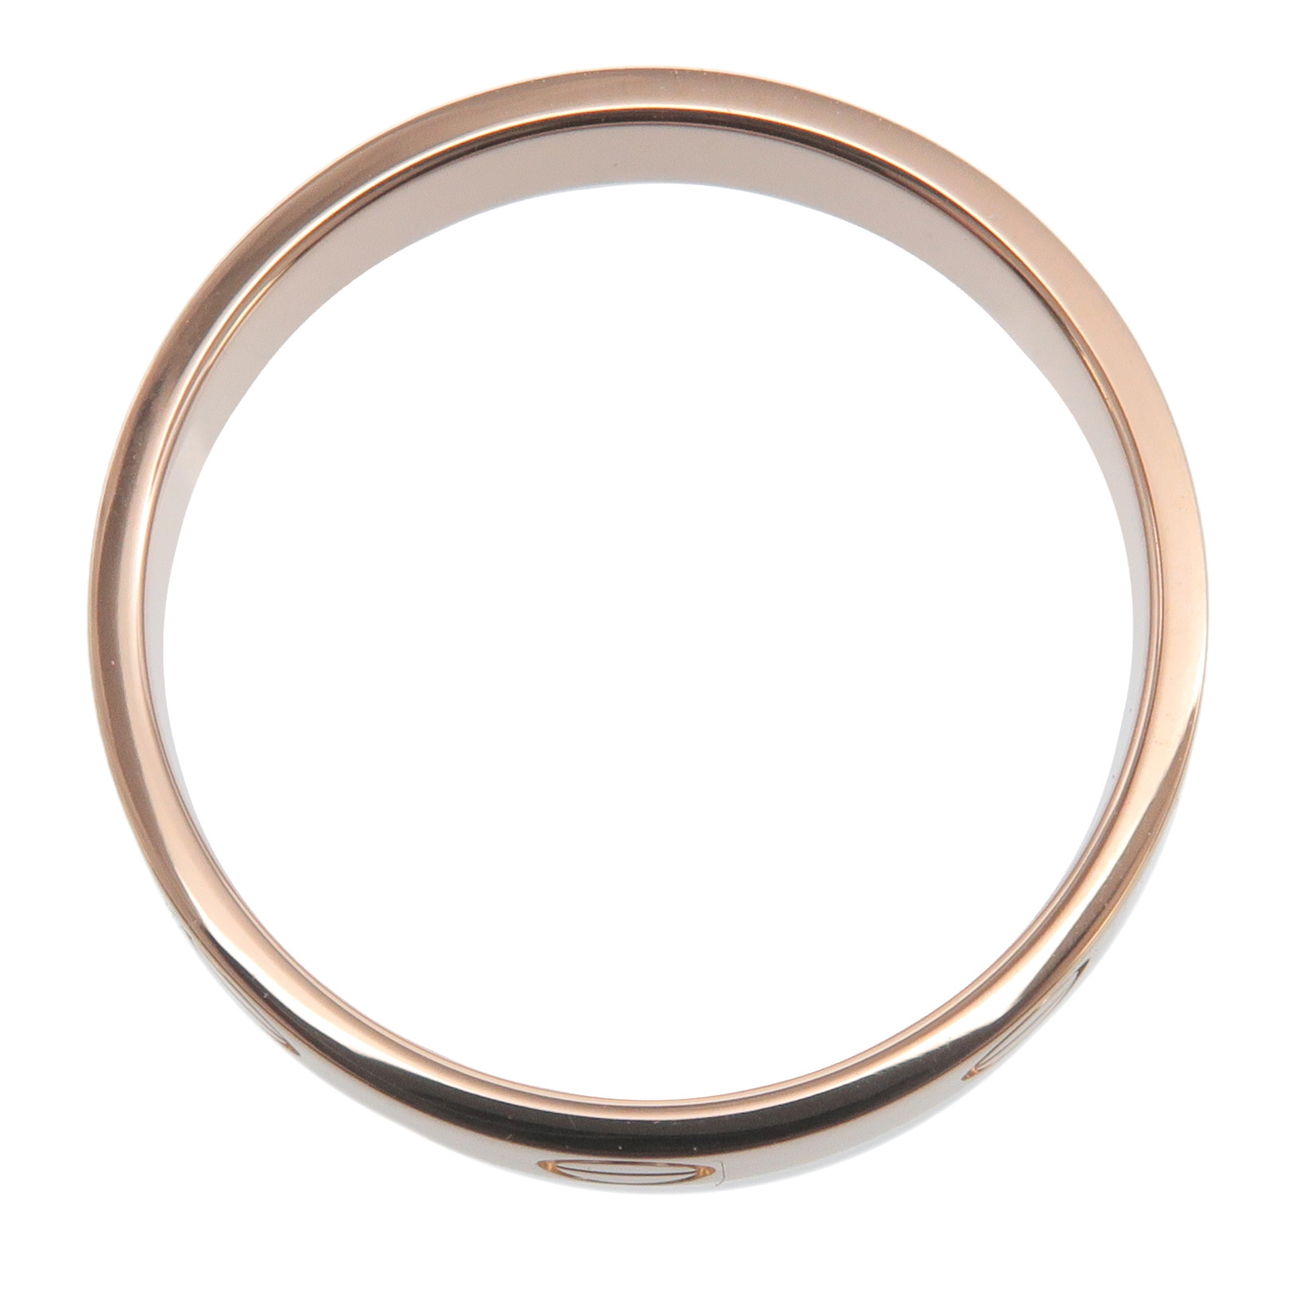 Cartier Mini Love Ring K18PG 750 Rose Gold #51 US5.5-6 EU51.5